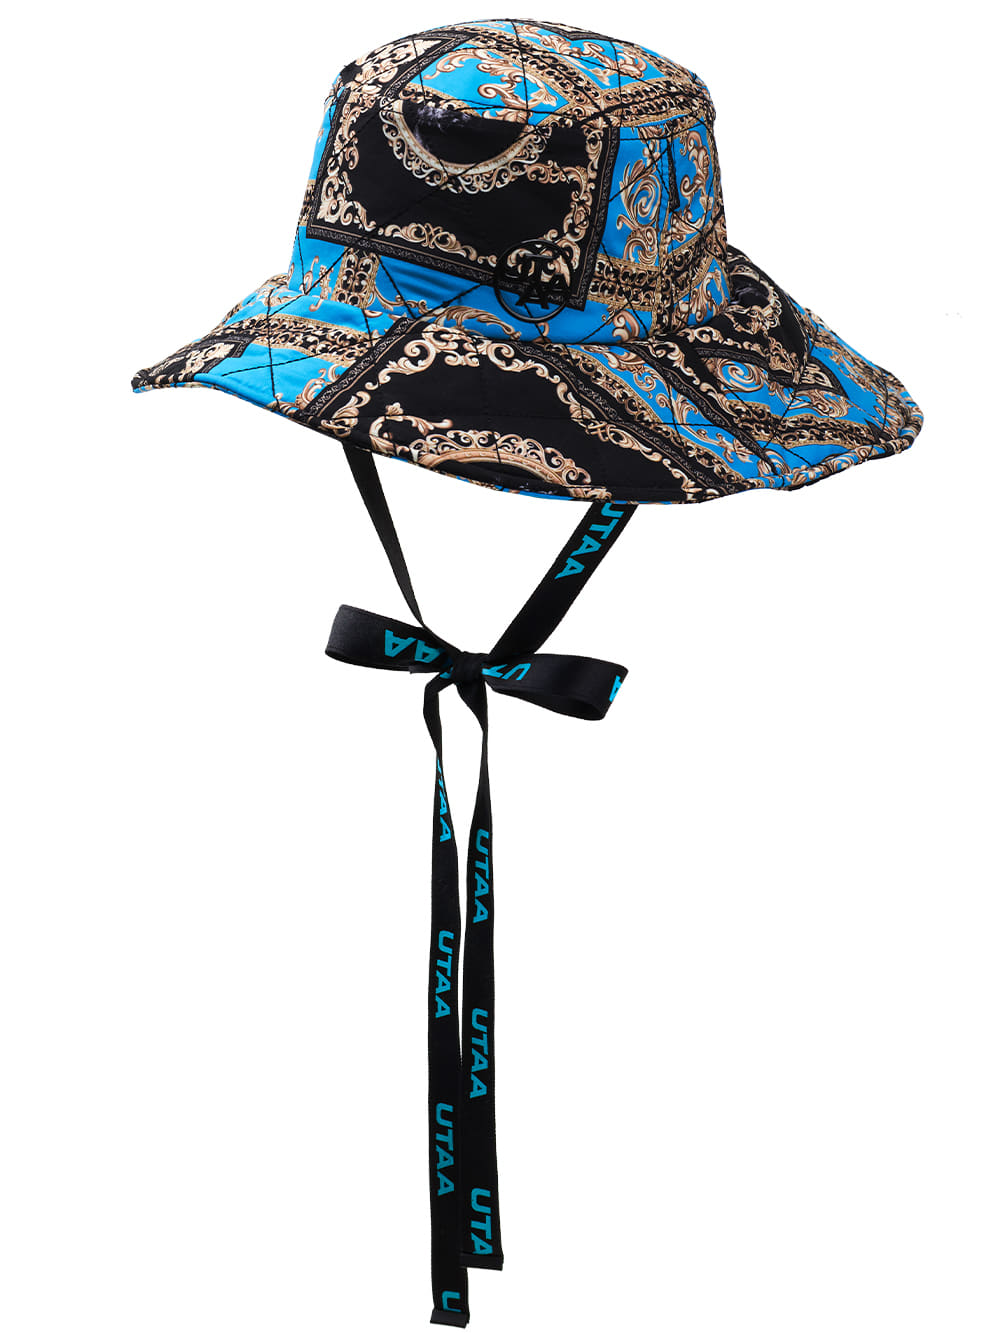 UTAA Dazzle Baroque Bucket Hat : Blue (UB1GCF300BL)